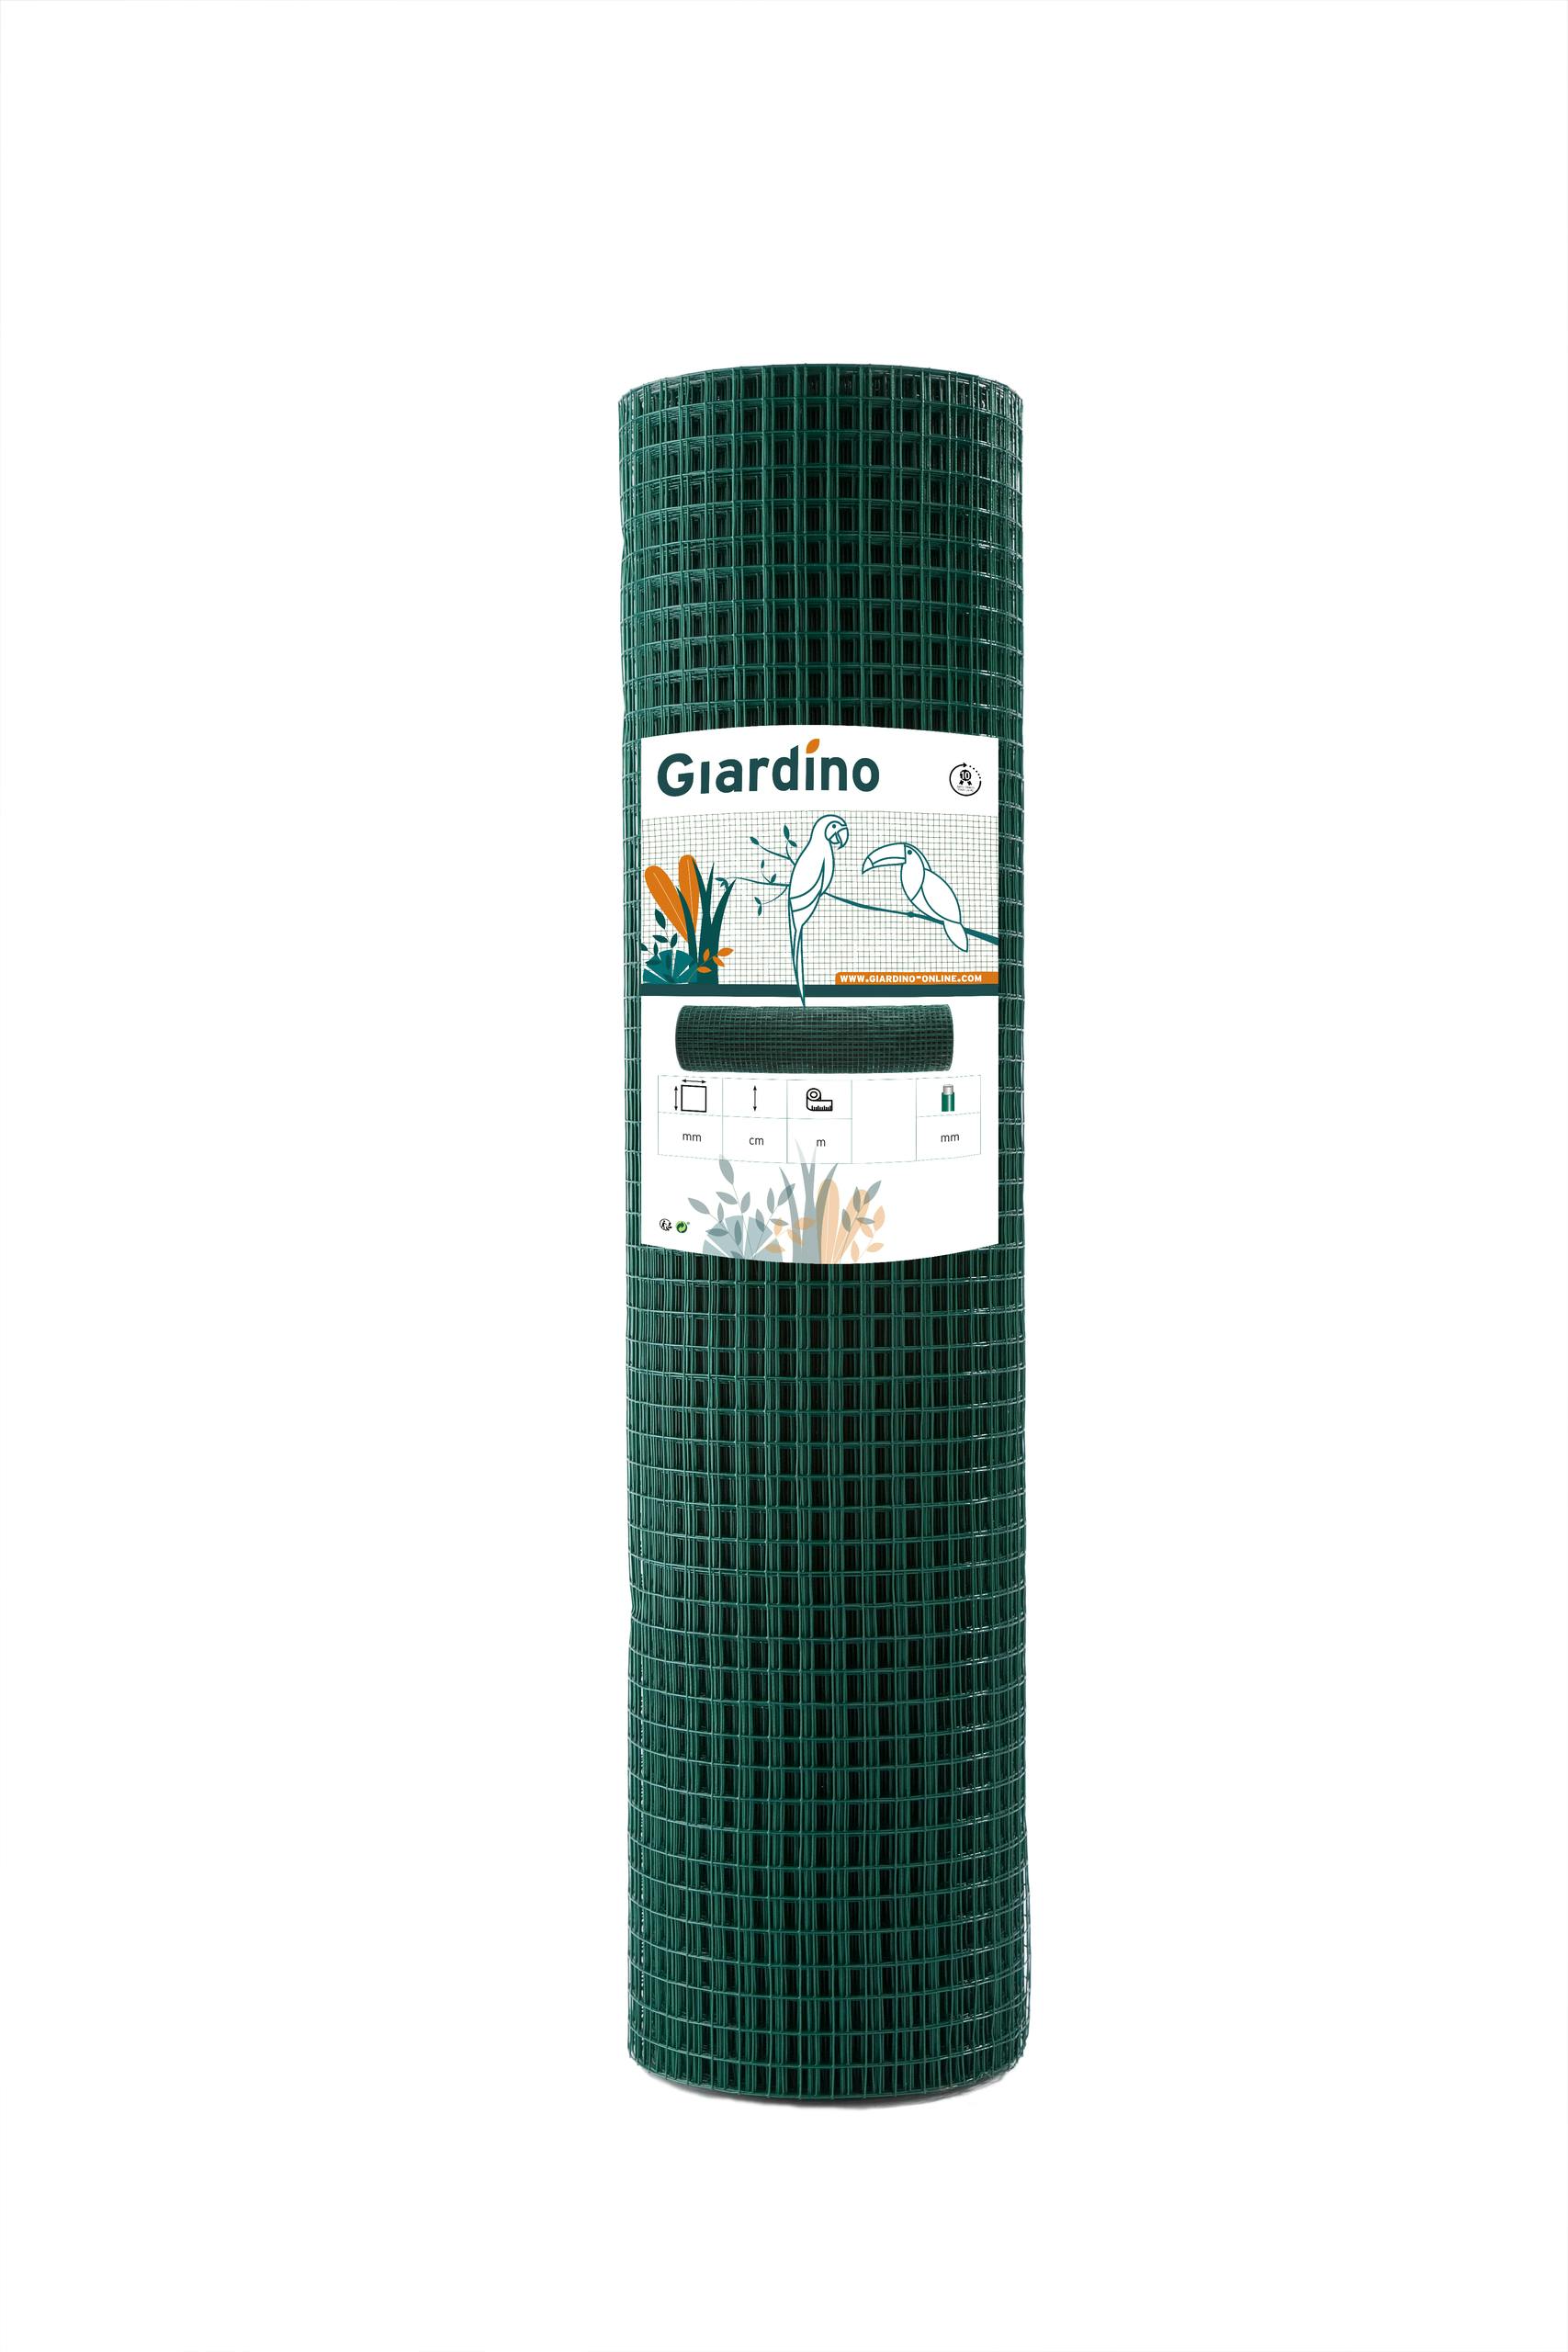 Giardino, Grillage Soudé, Plastifié, 25.4x2.3mmx102cmx25m Ral 6005 Vert